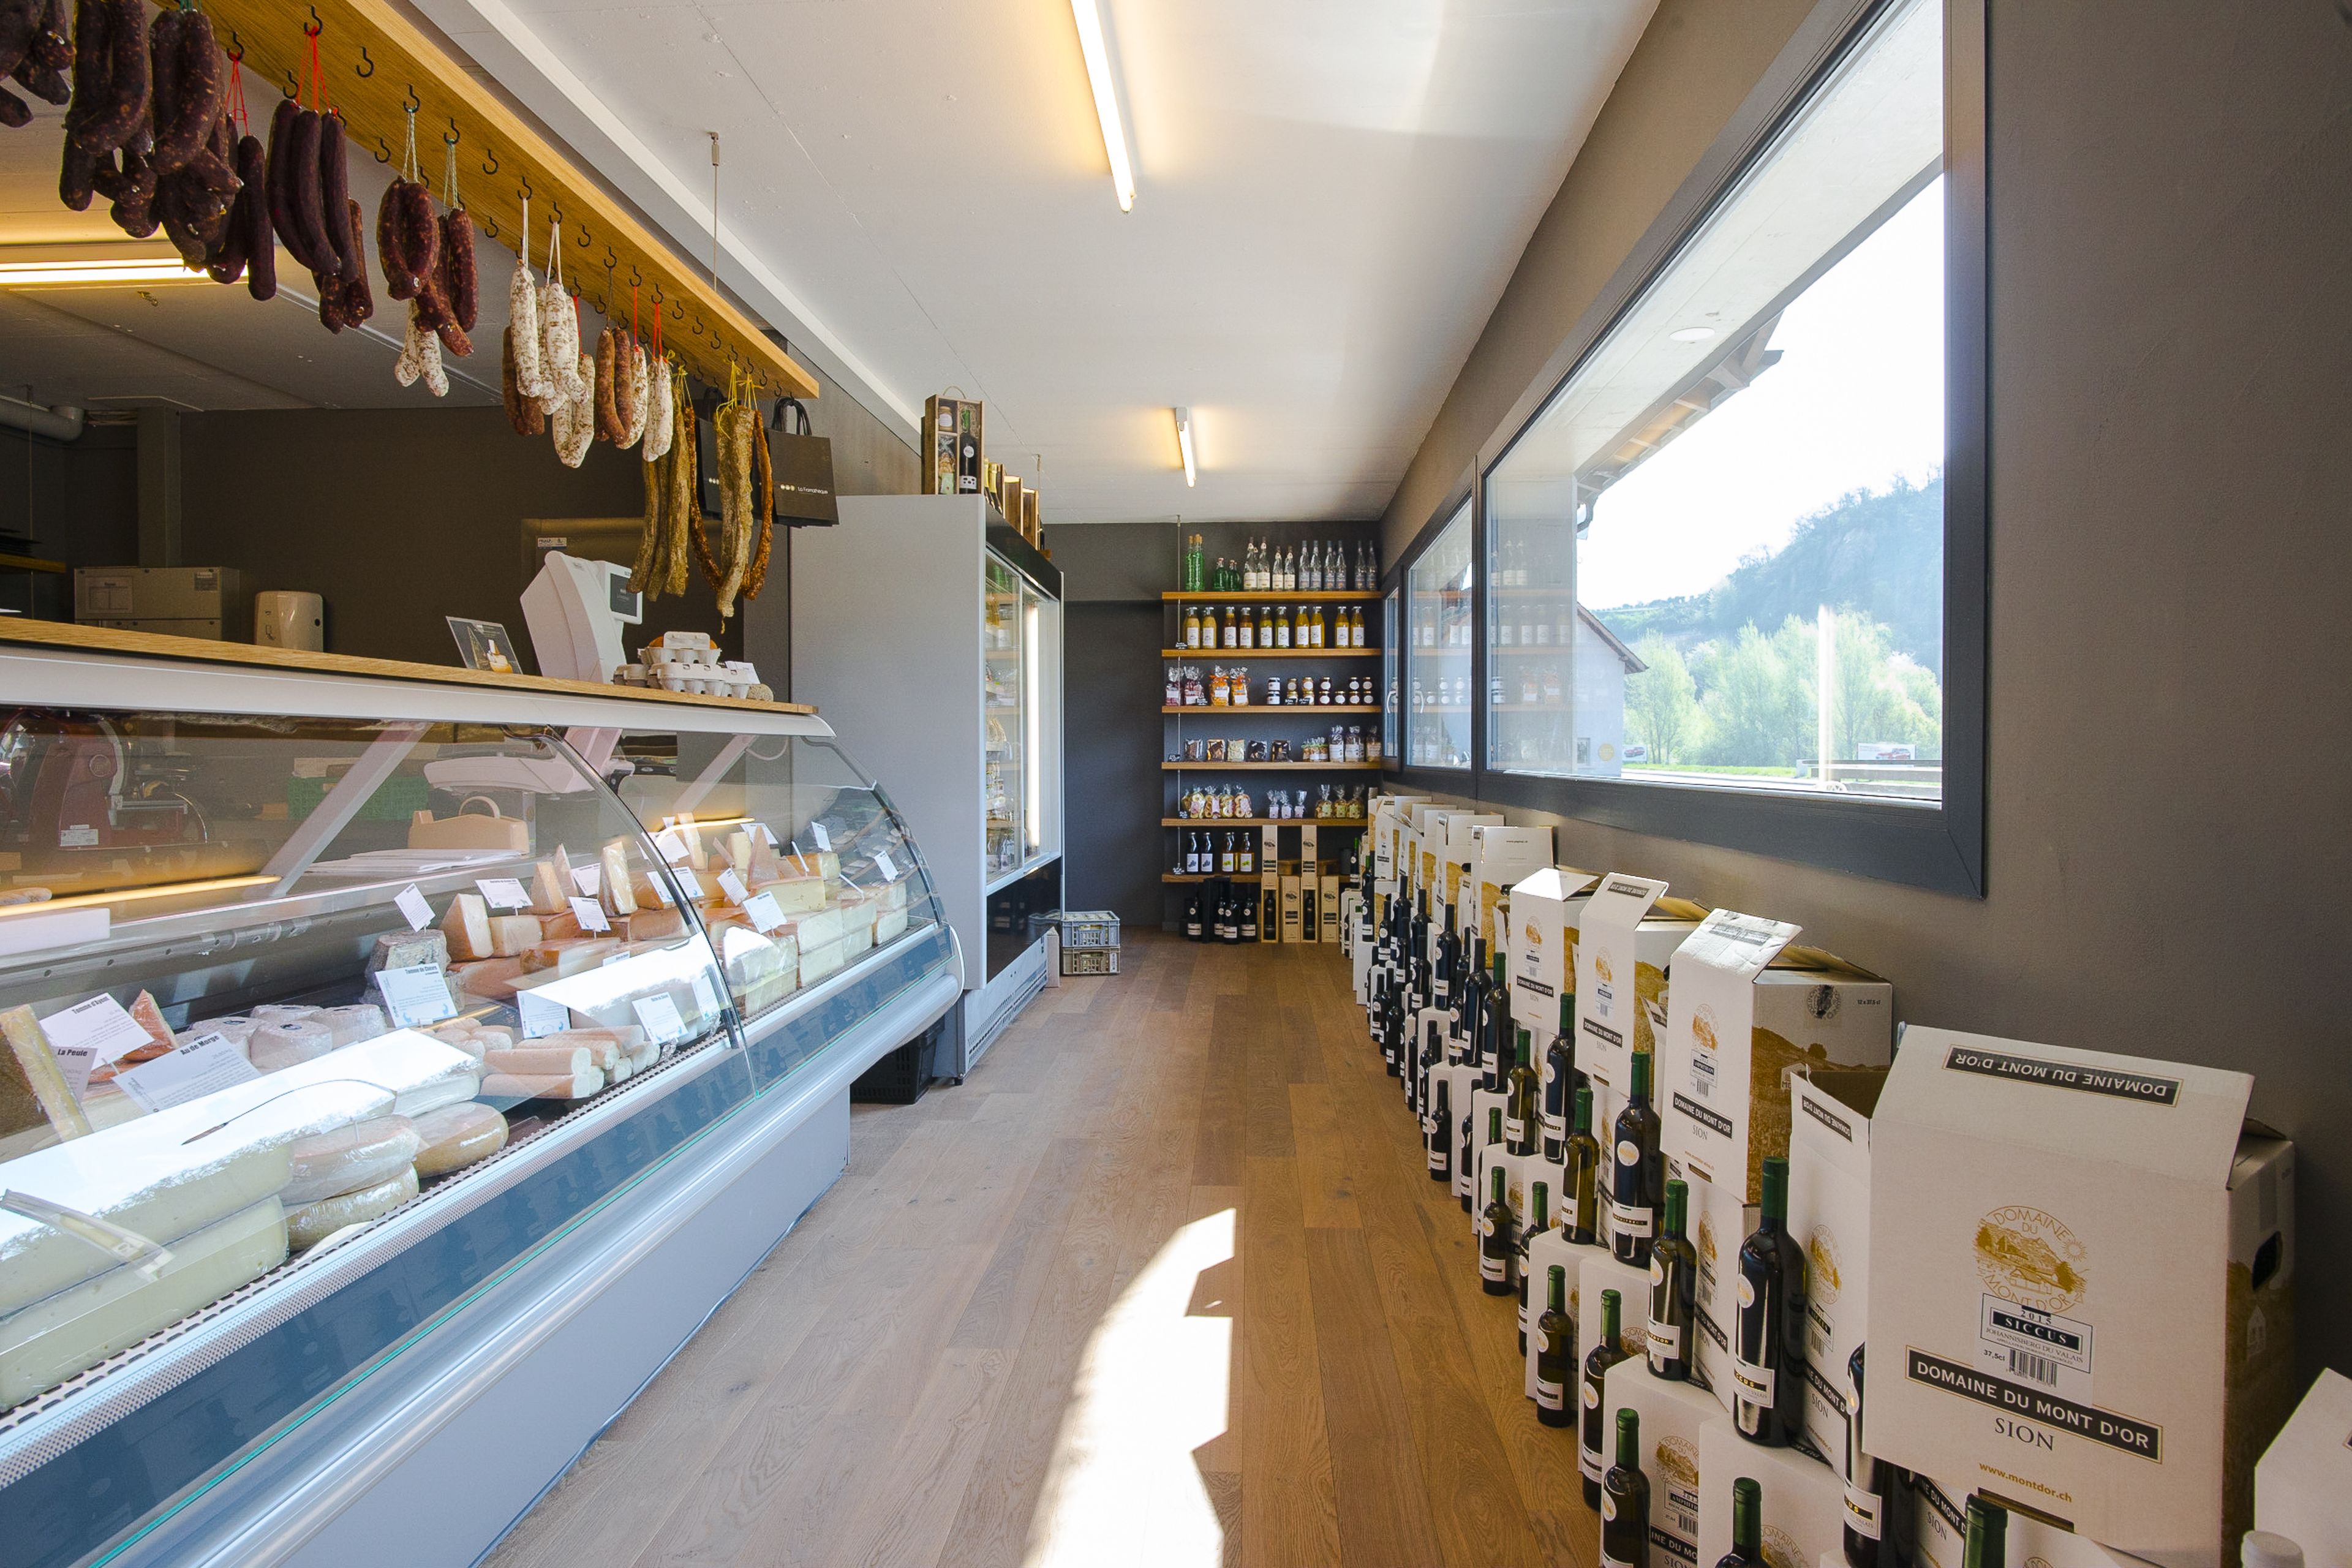 Verkaufsstelle Caveau Mont d'Or, Sion Wallis Schweiz